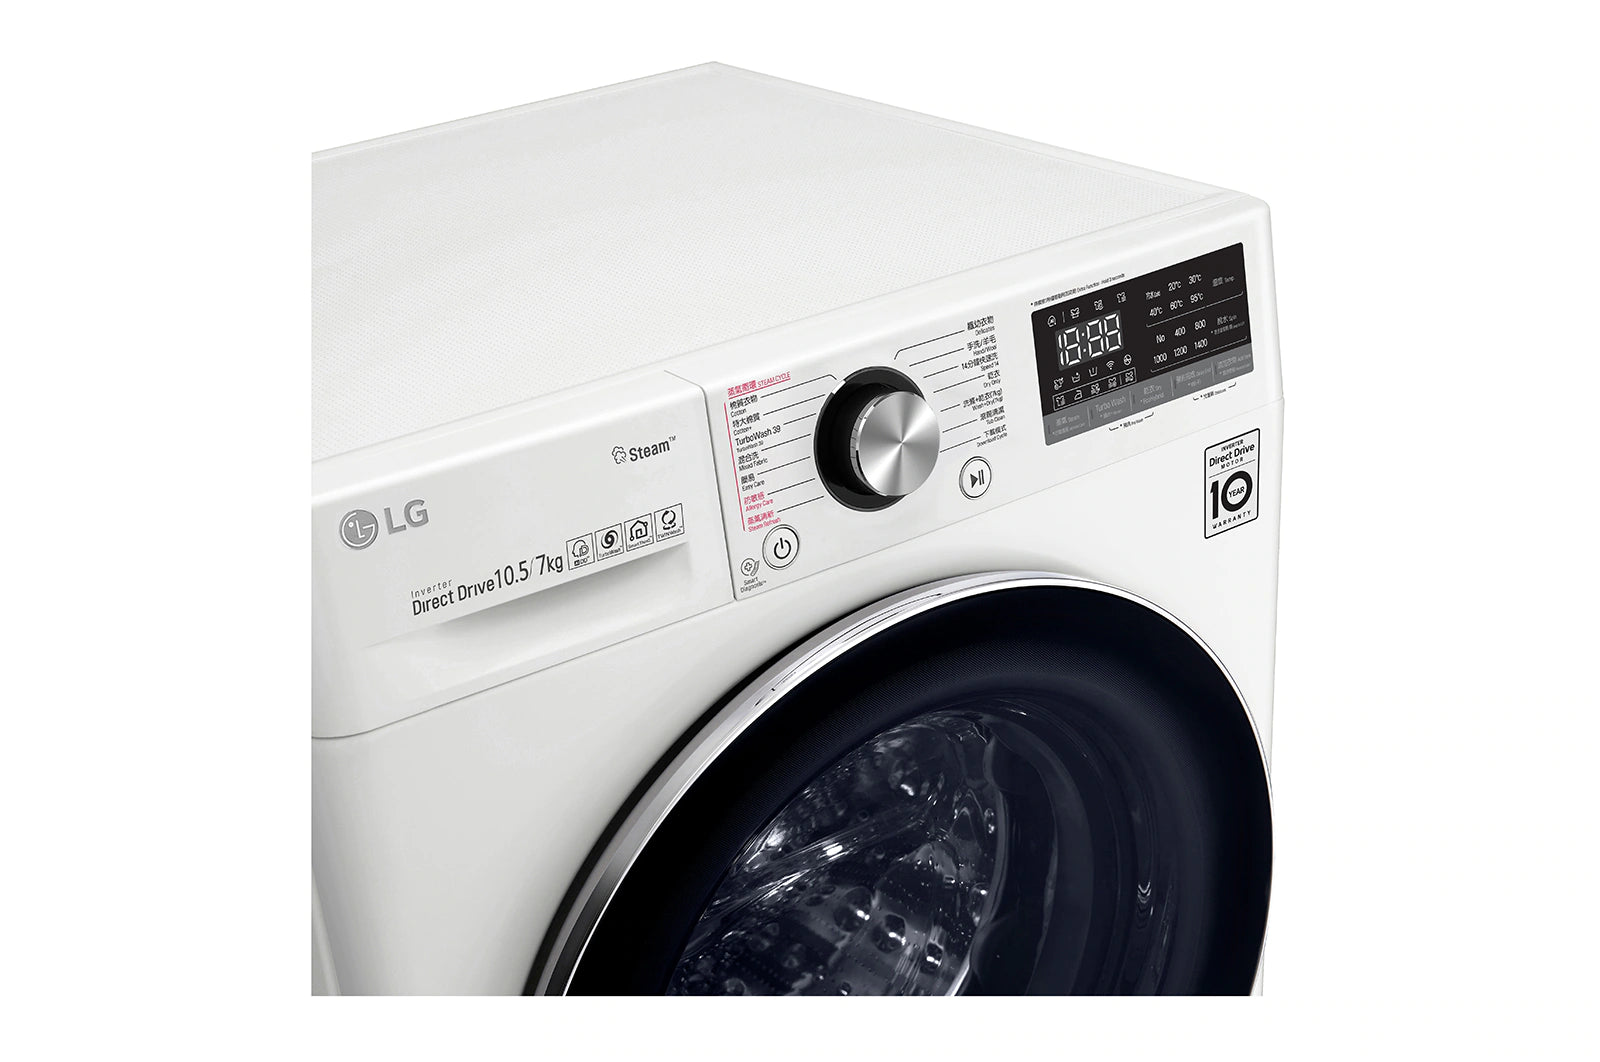 LG 樂金 F-C14105V2W 10.5公升洗衣/7公斤乾衣 1400轉 人工智能洗衣乾衣機